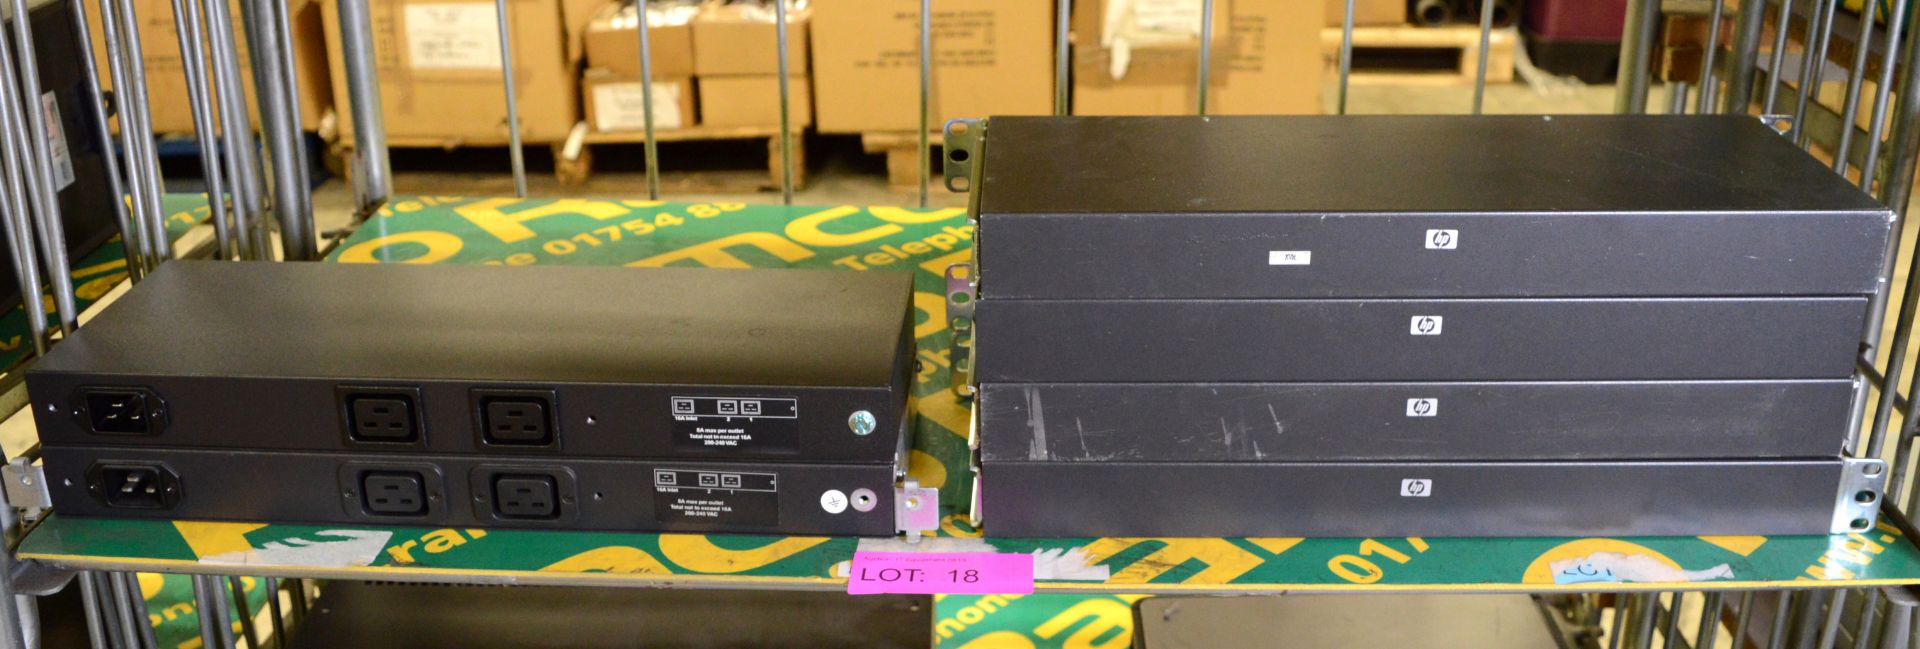 2x HP Modular PDU Control Units, 4x HP KVM Switcher panels